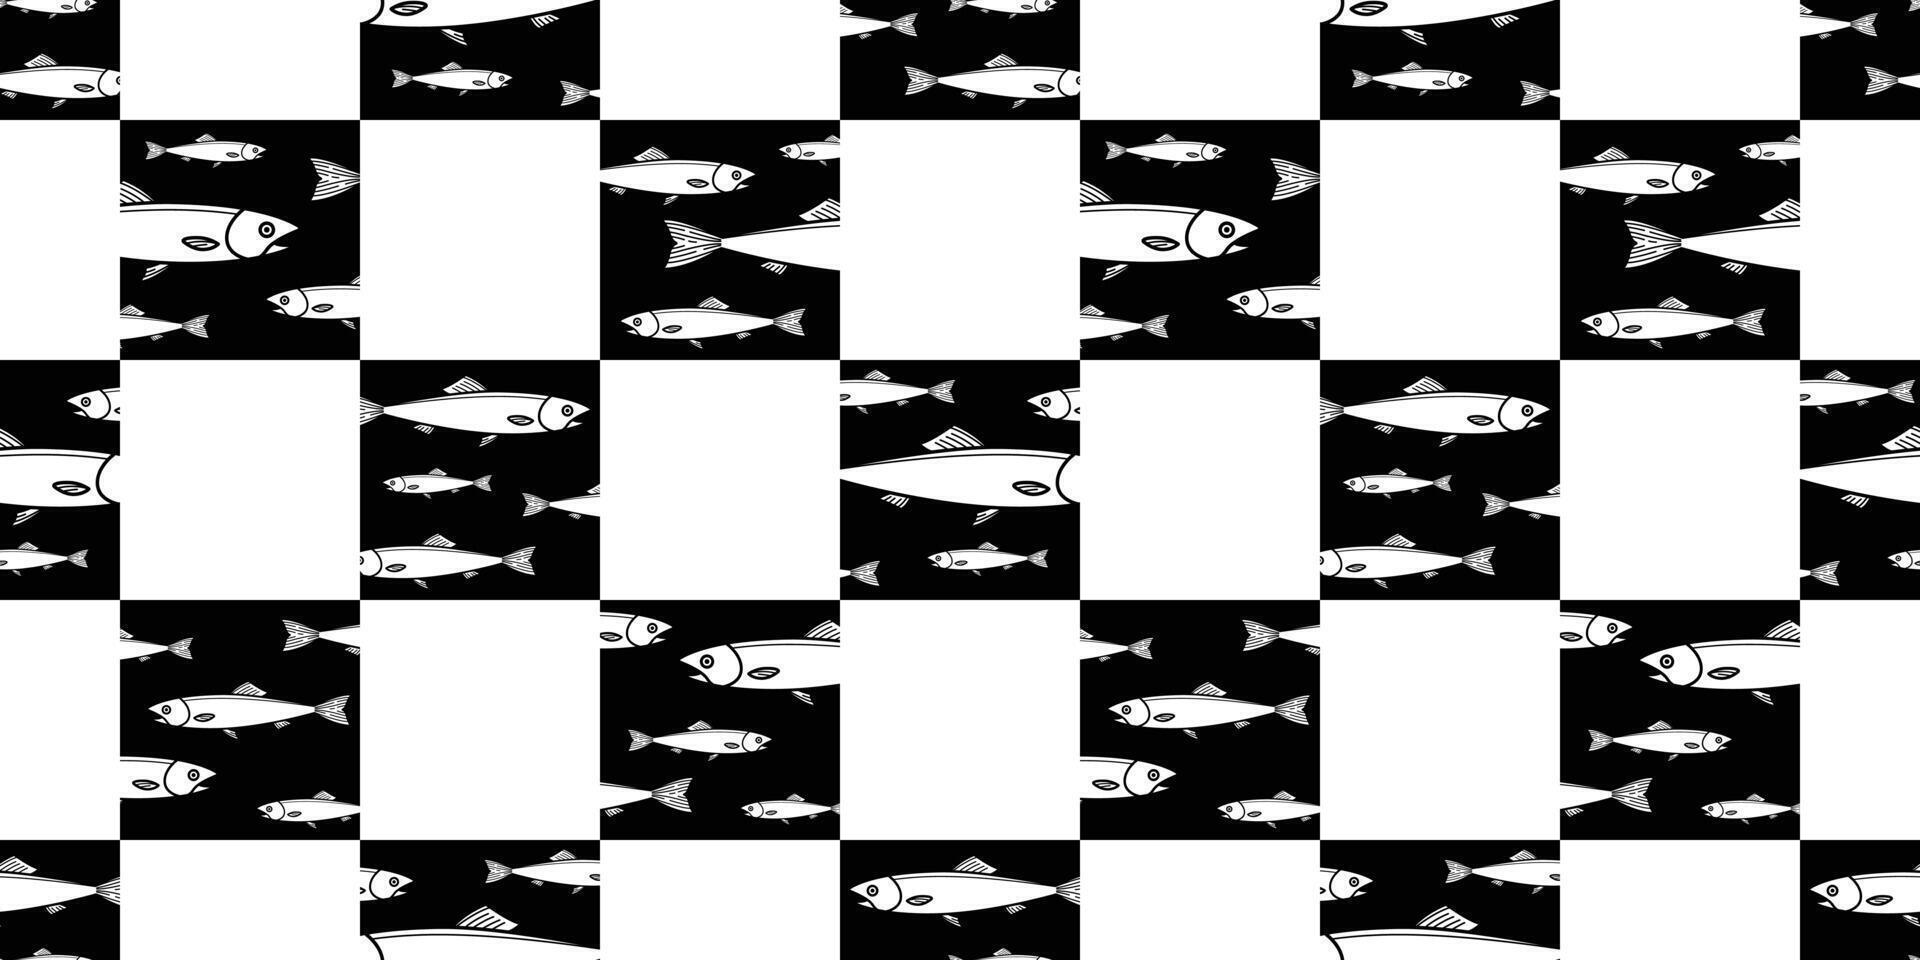 pescado sin costura modelo salmón vector comprobado atún tiburón bufanda aislado delfín ballena Oceano mar repetir fondo de pantalla loseta antecedentes dibujos animados ilustración animal garabatear diseño